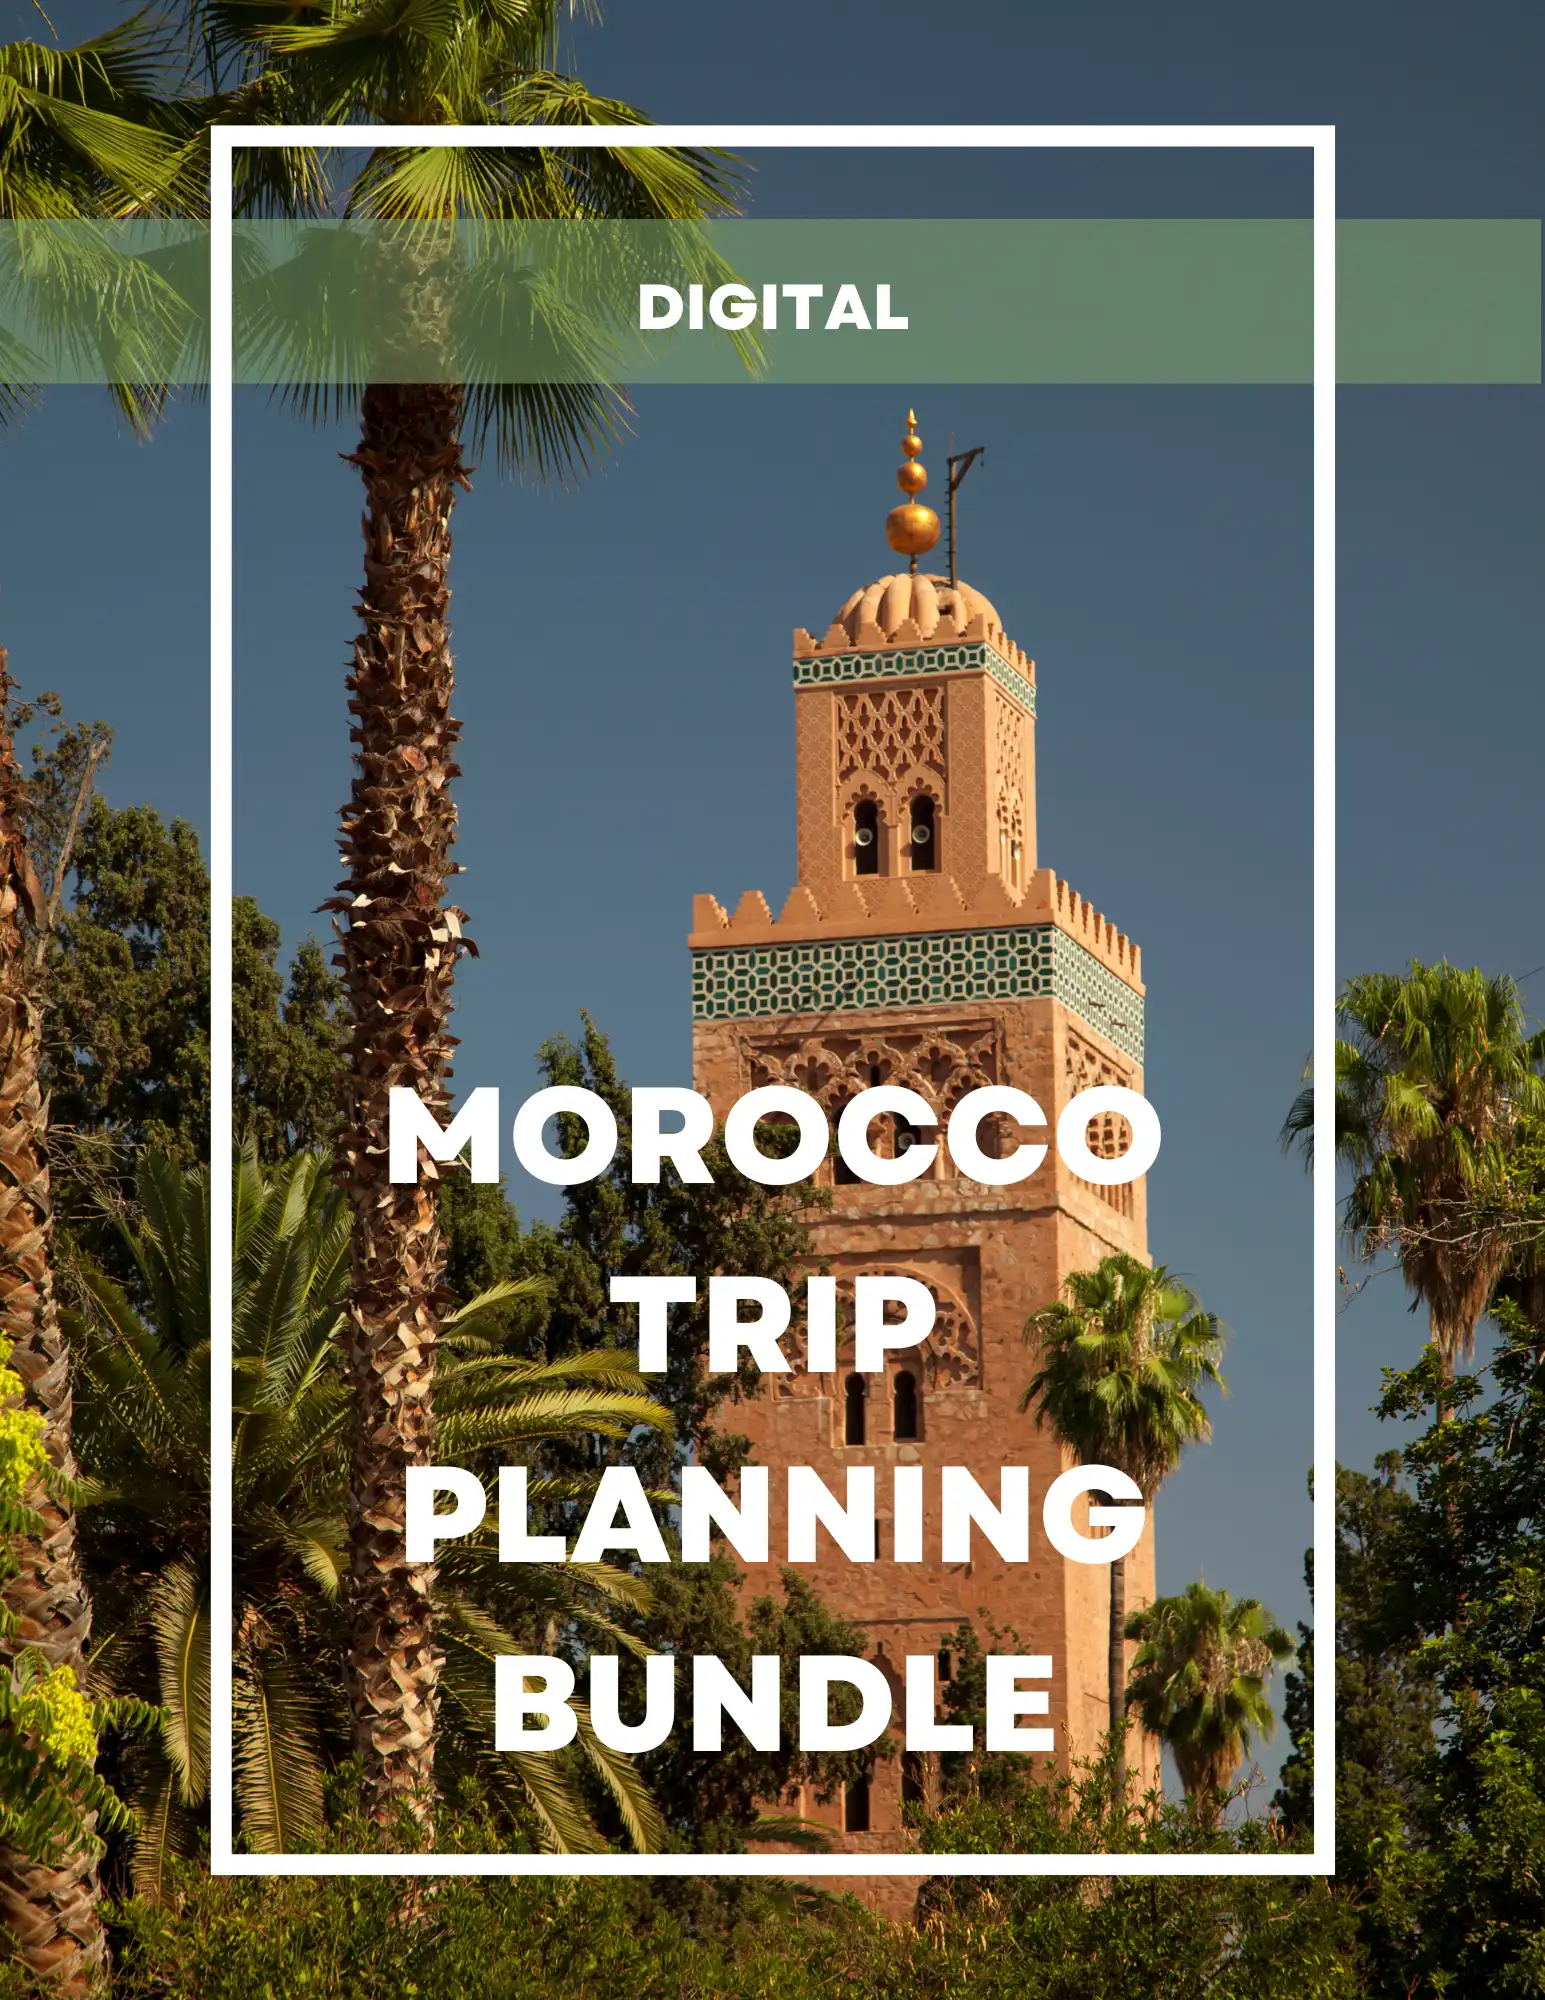 The Ultimate Morocco Travel Bundle